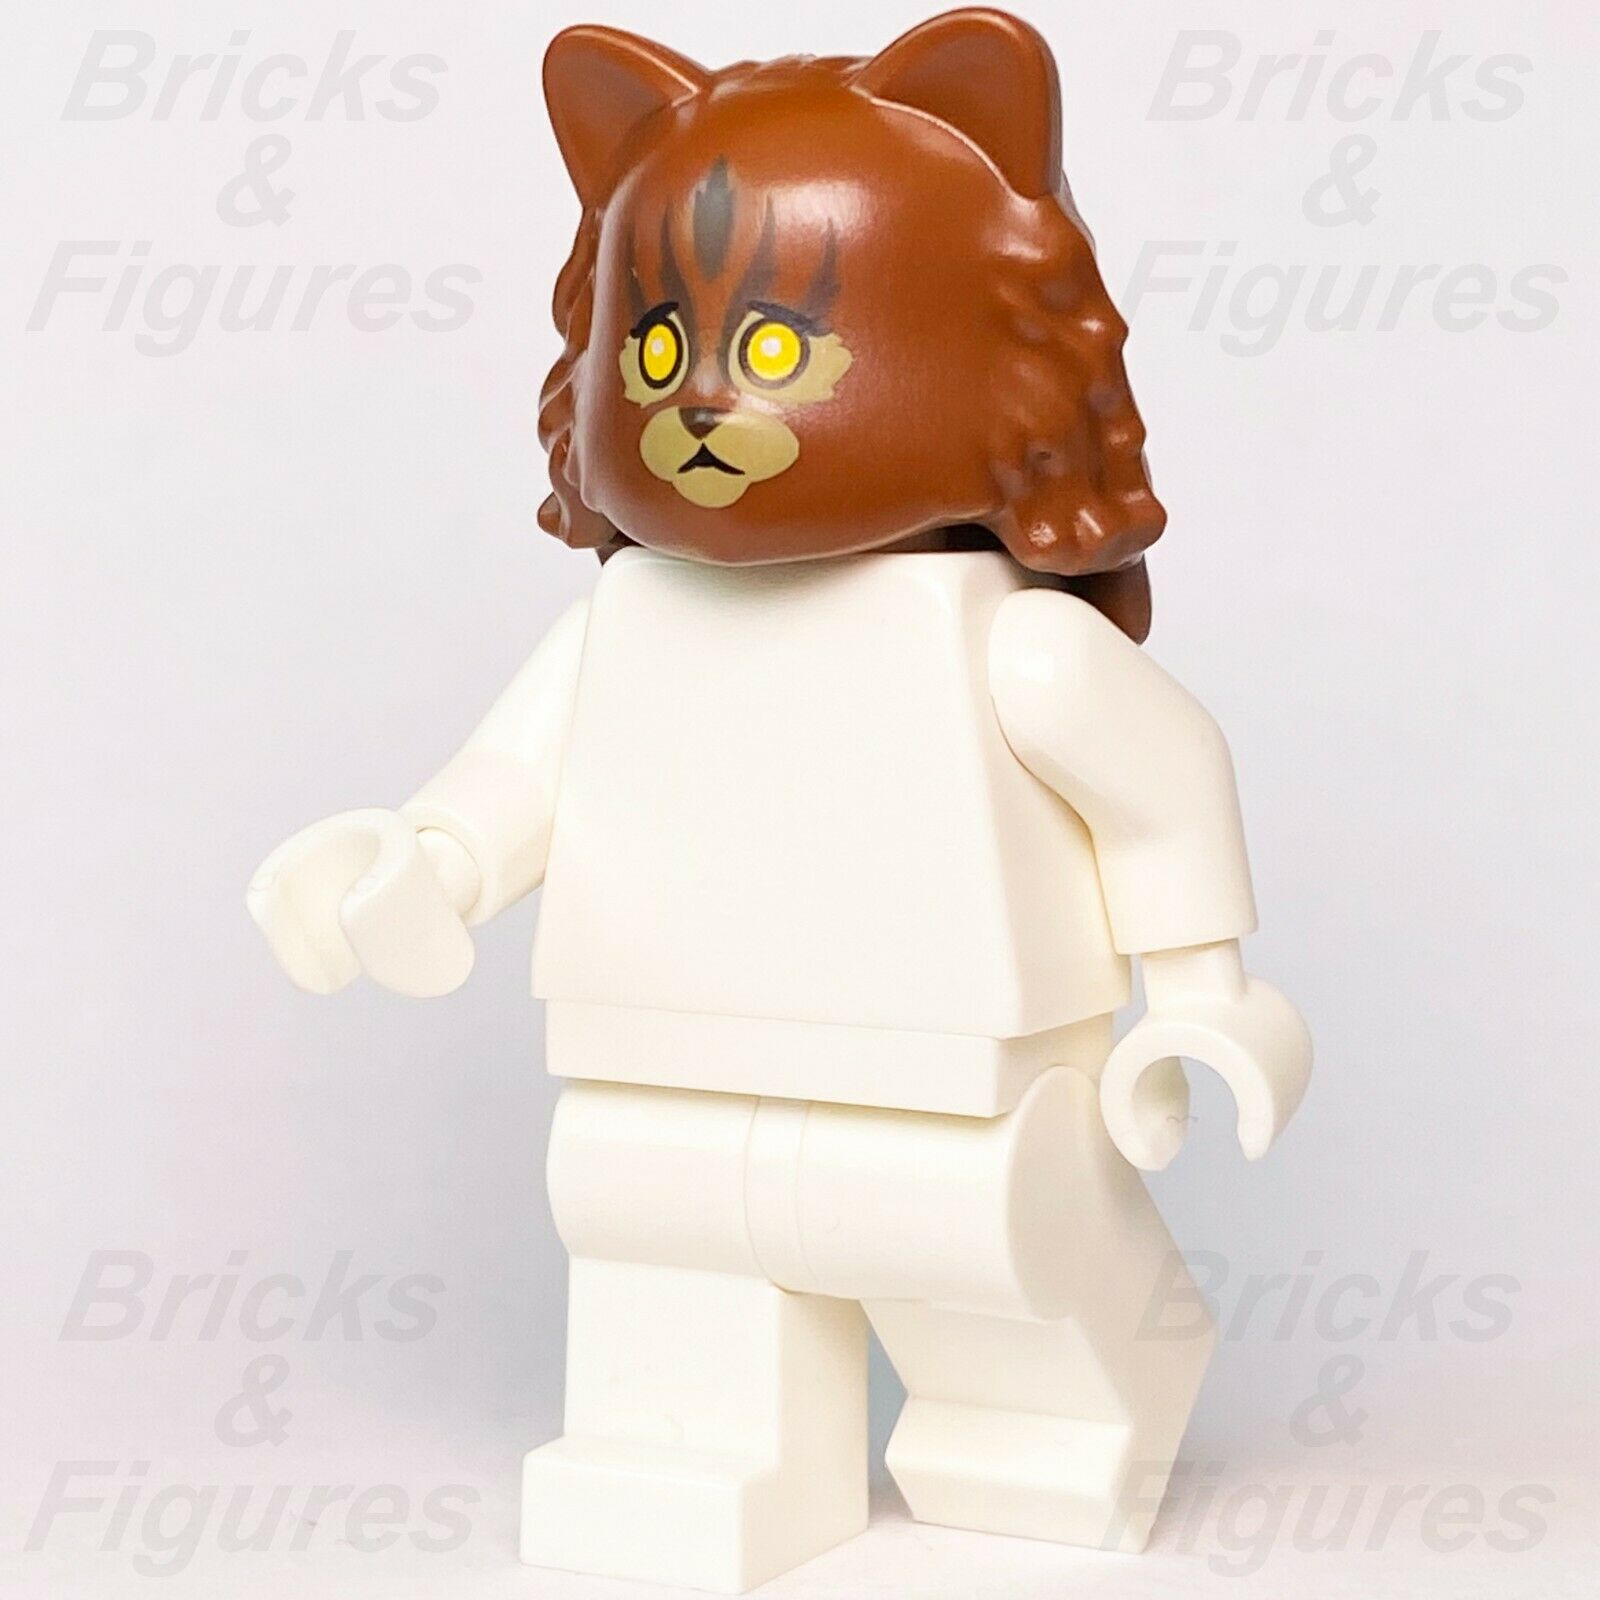 New Harry Potter LEGO Hermione Granger Cat Head Mask Minifigure Part 76386 - Bricks & Figures